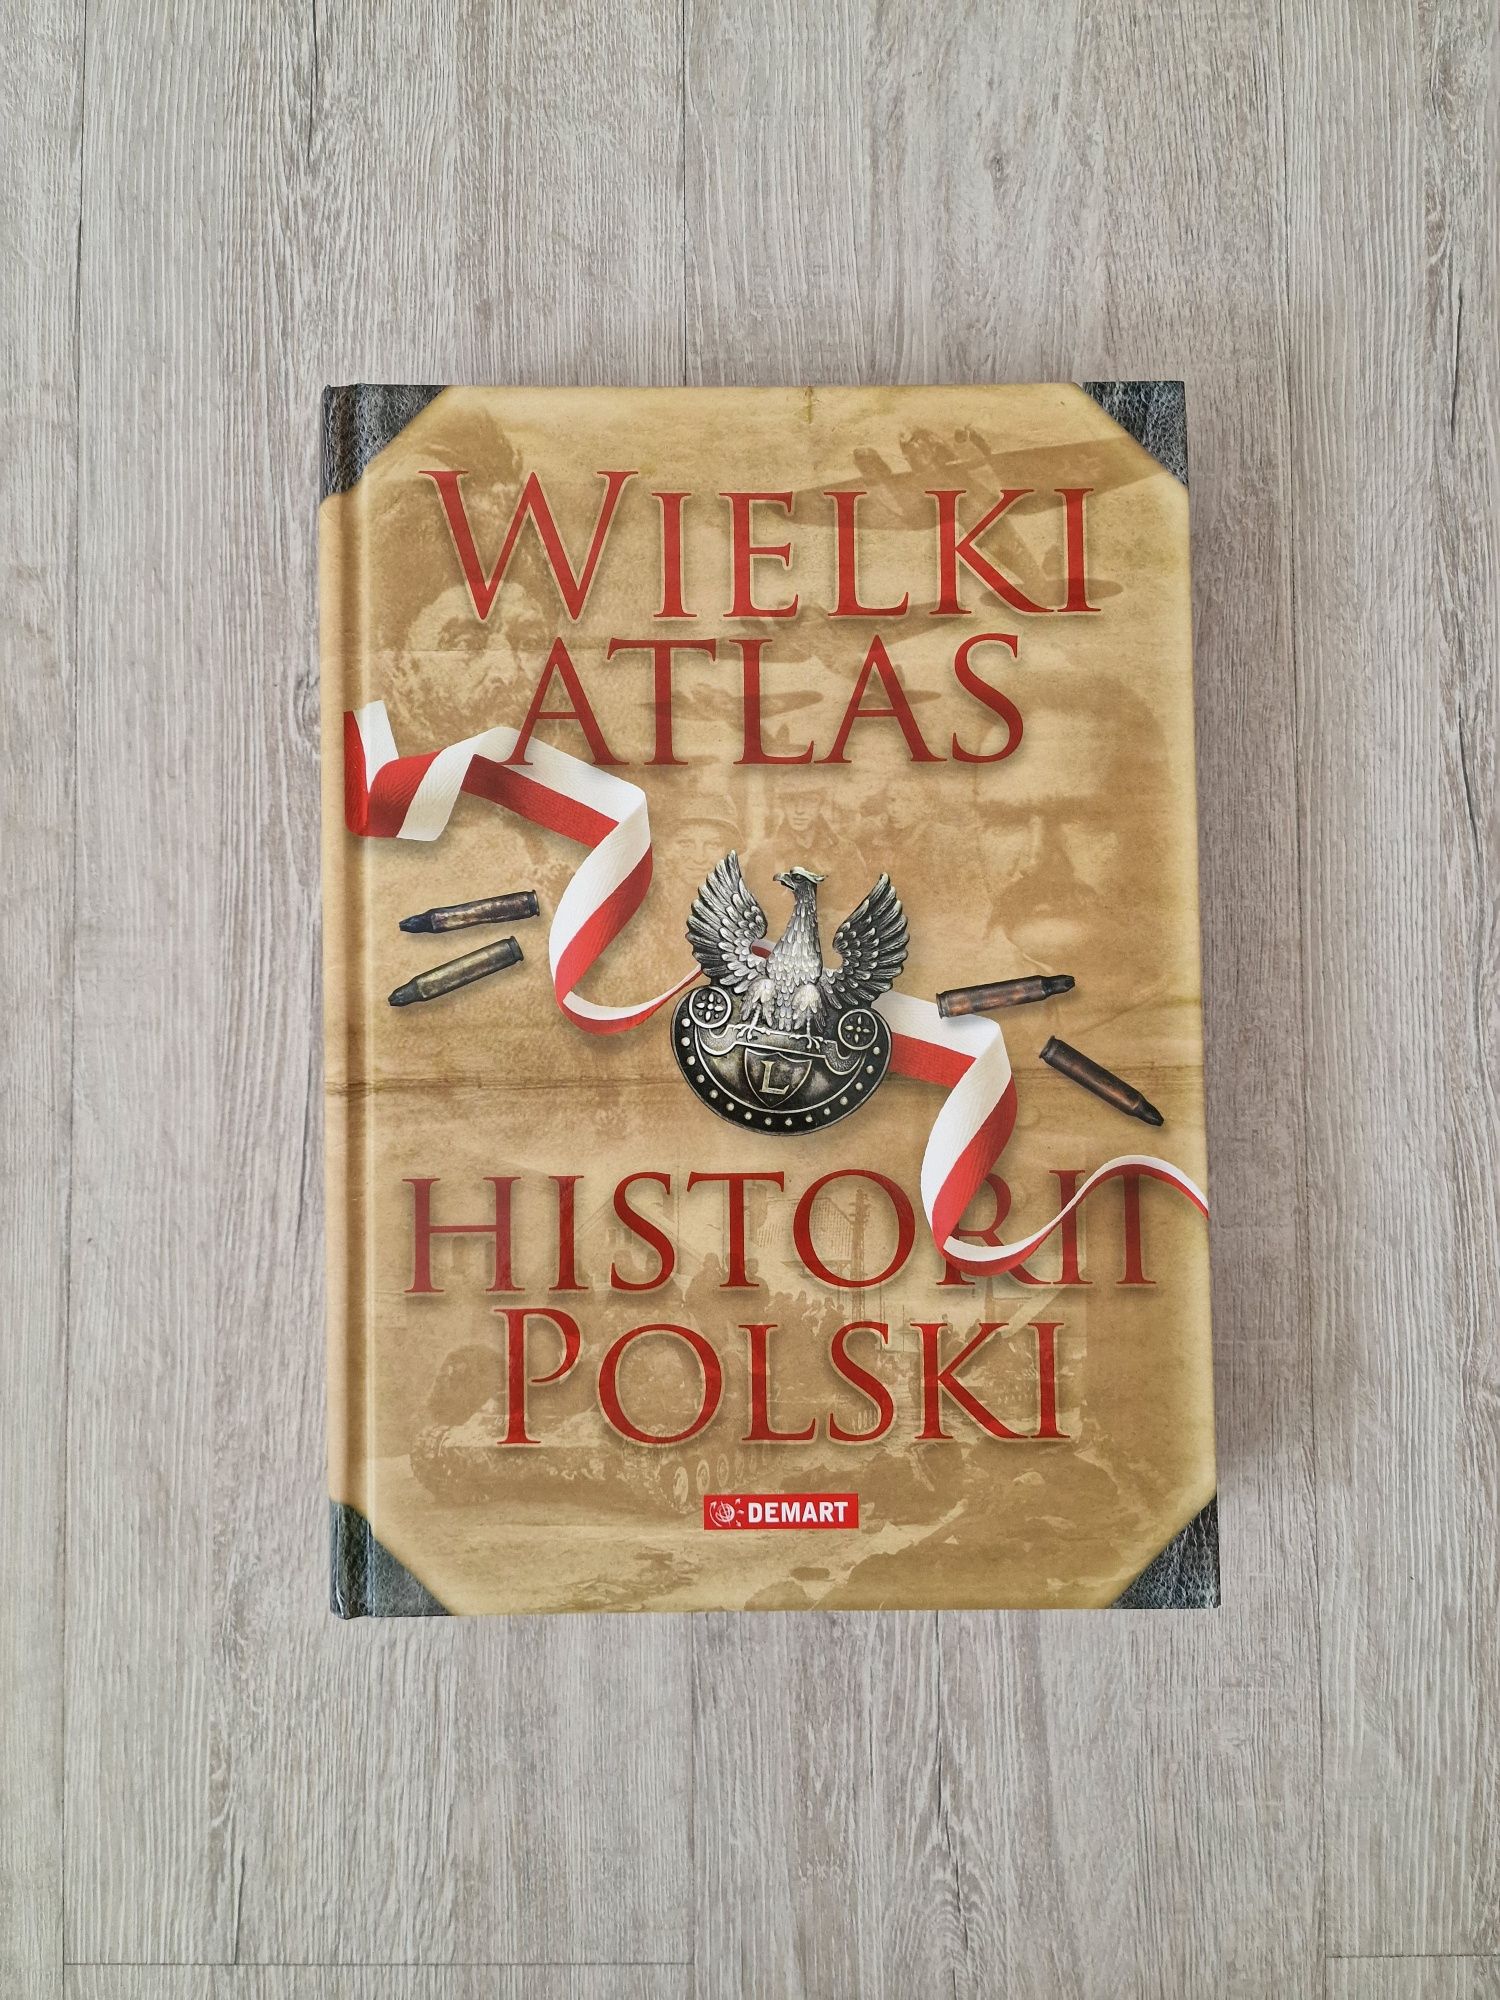 Wielki atlas historii Polski - demart, 2021